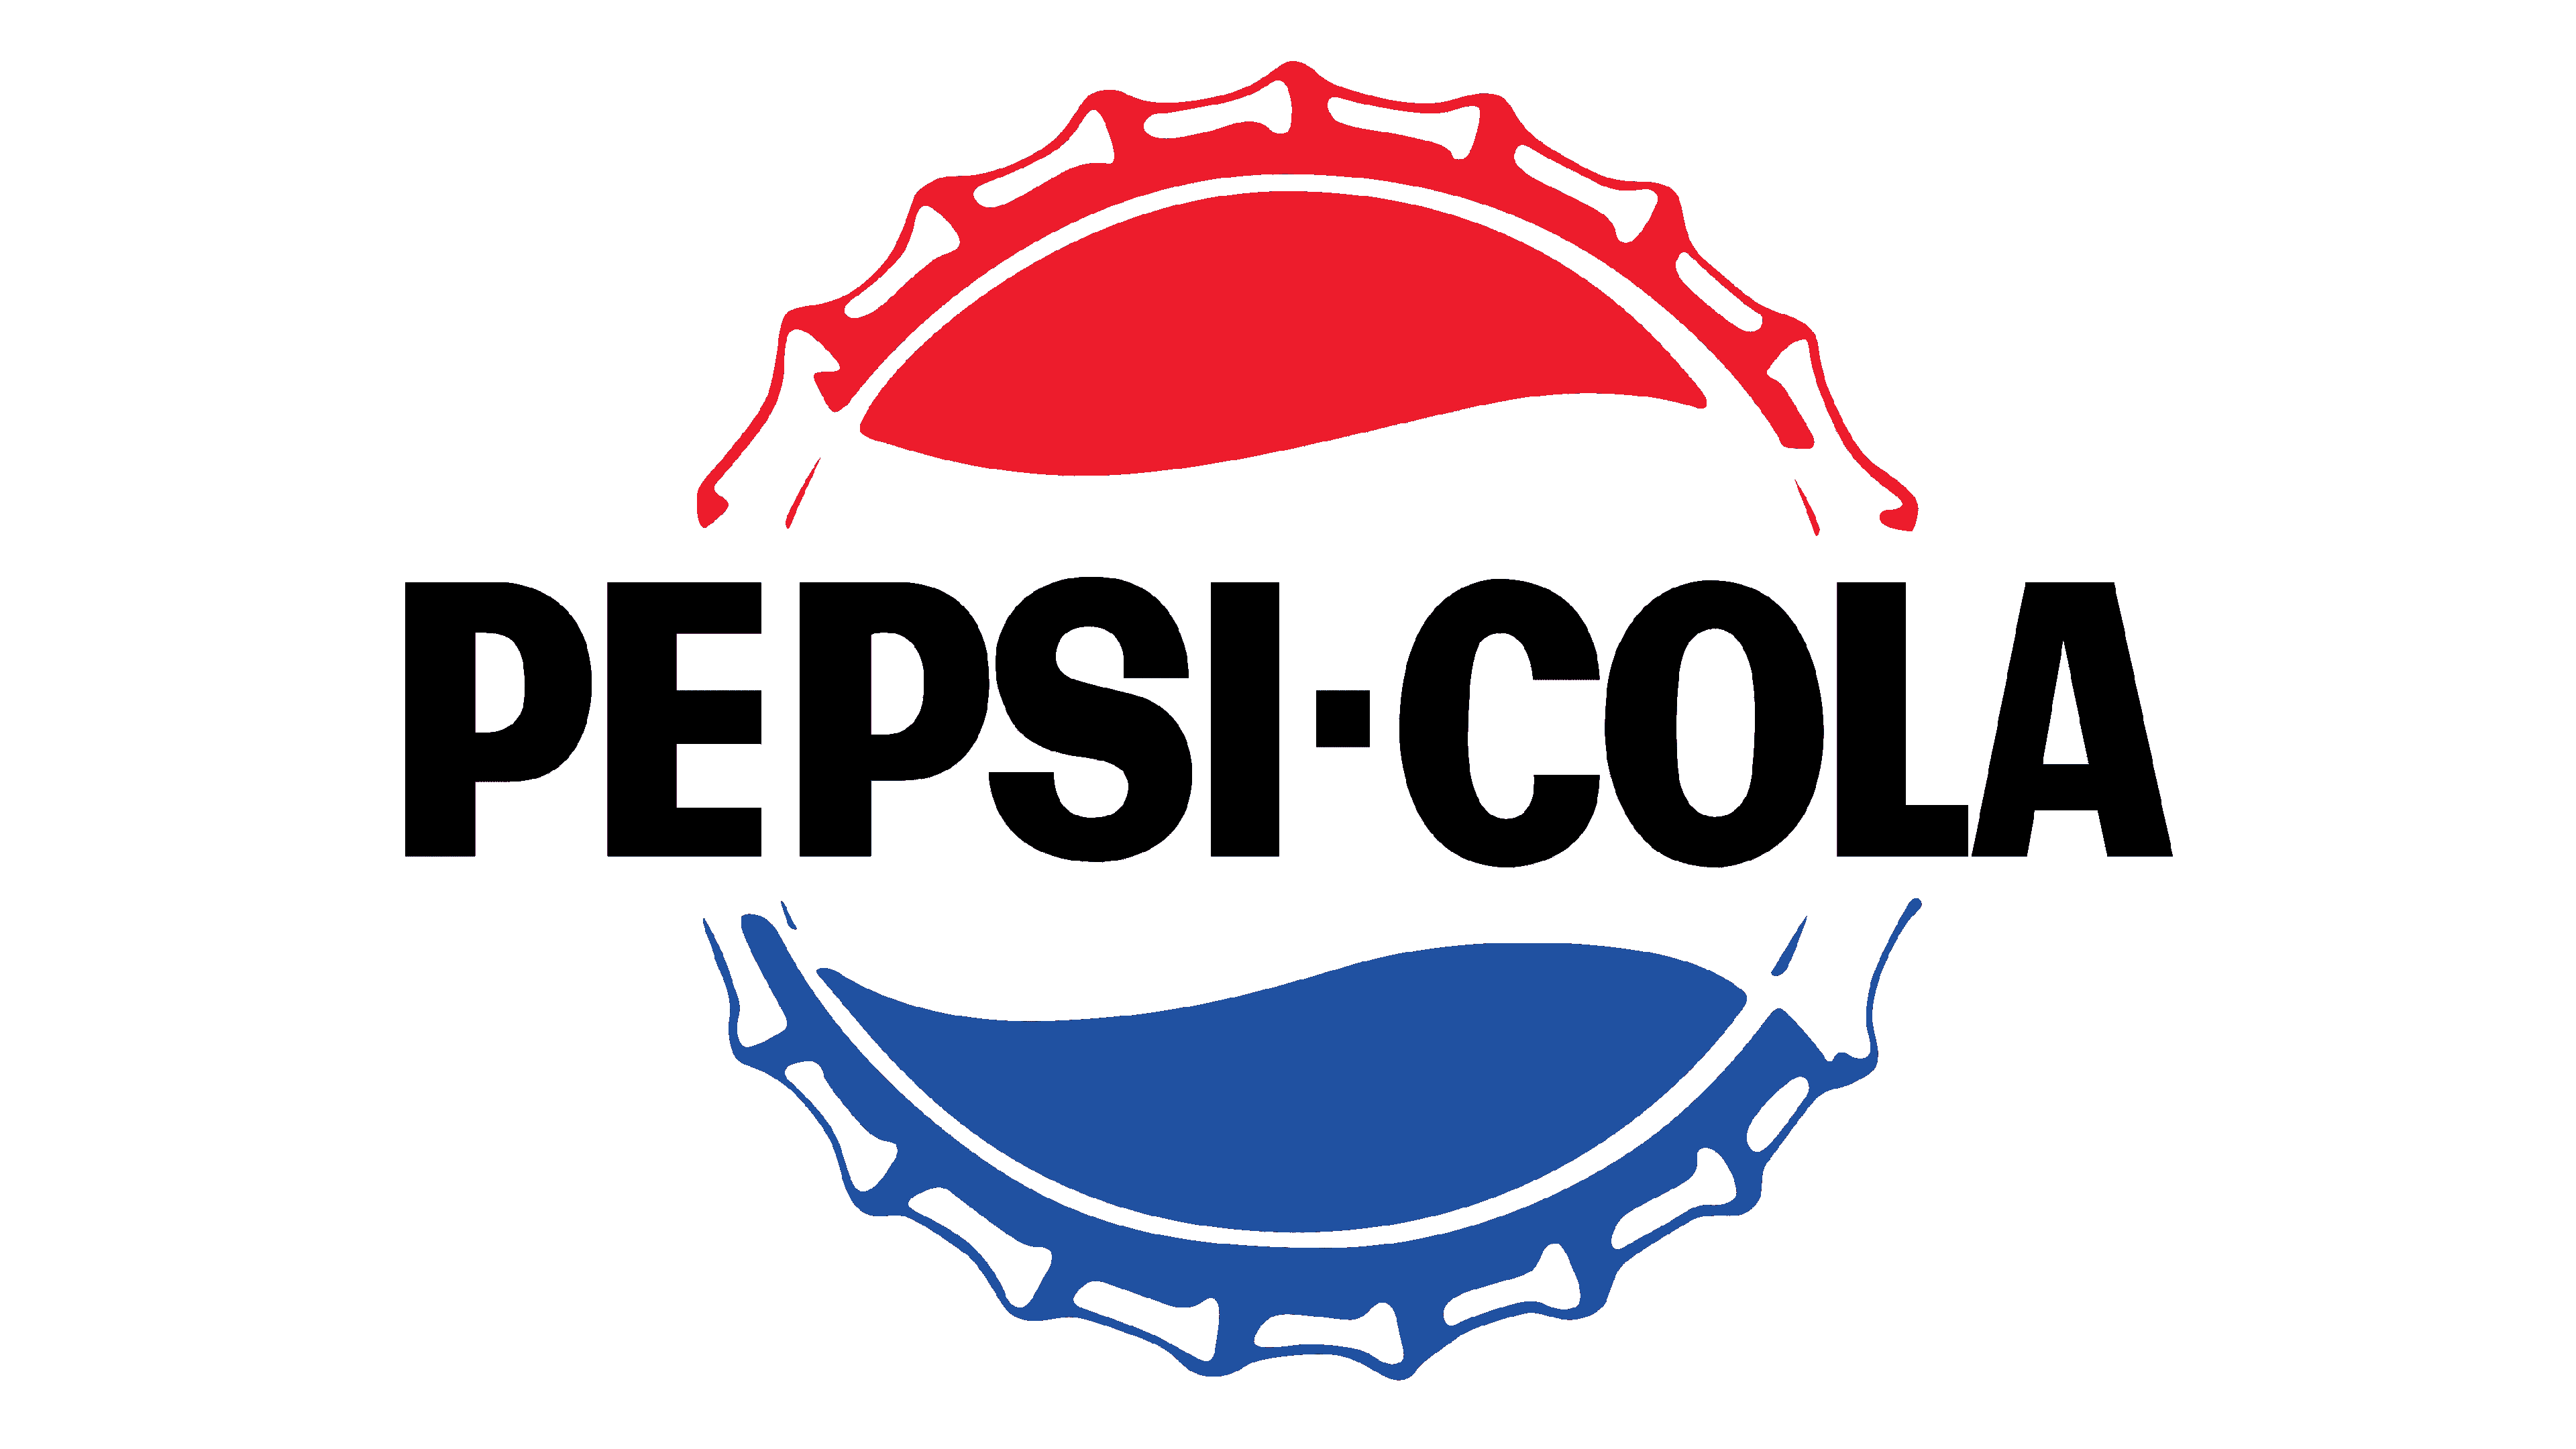 Pepsi Font